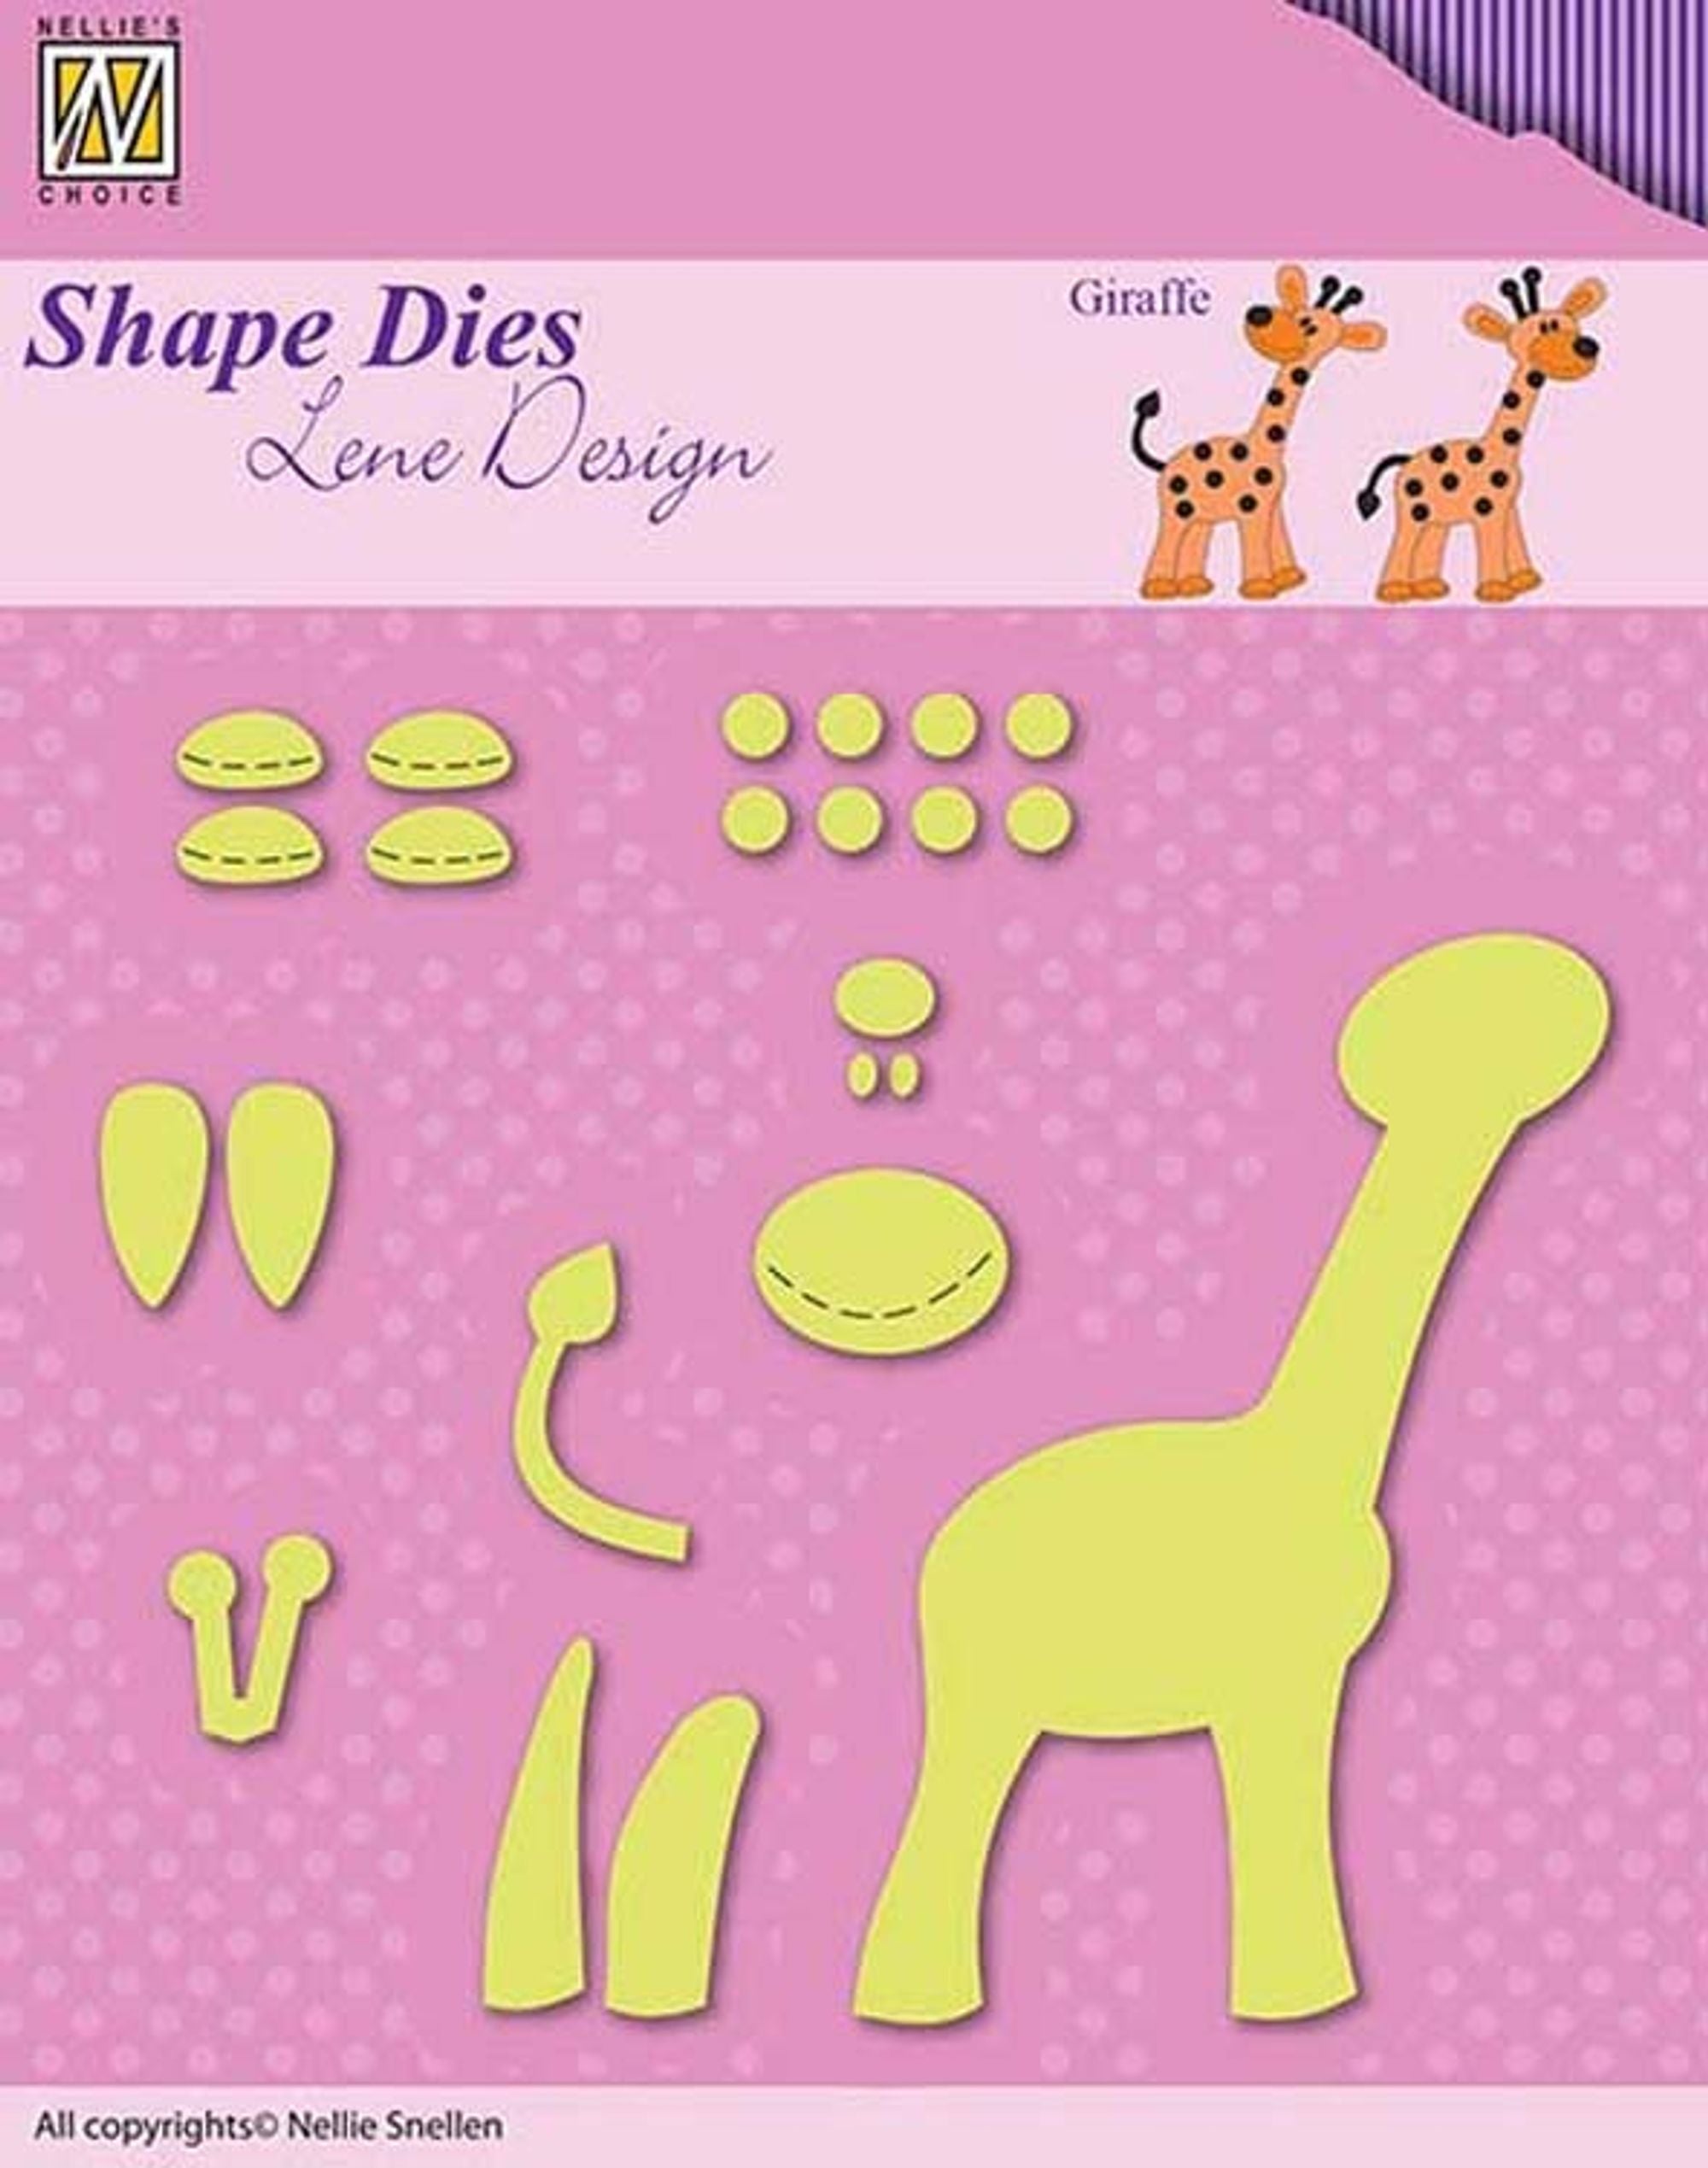 Nellie's Choice - Shape Die Giraffe